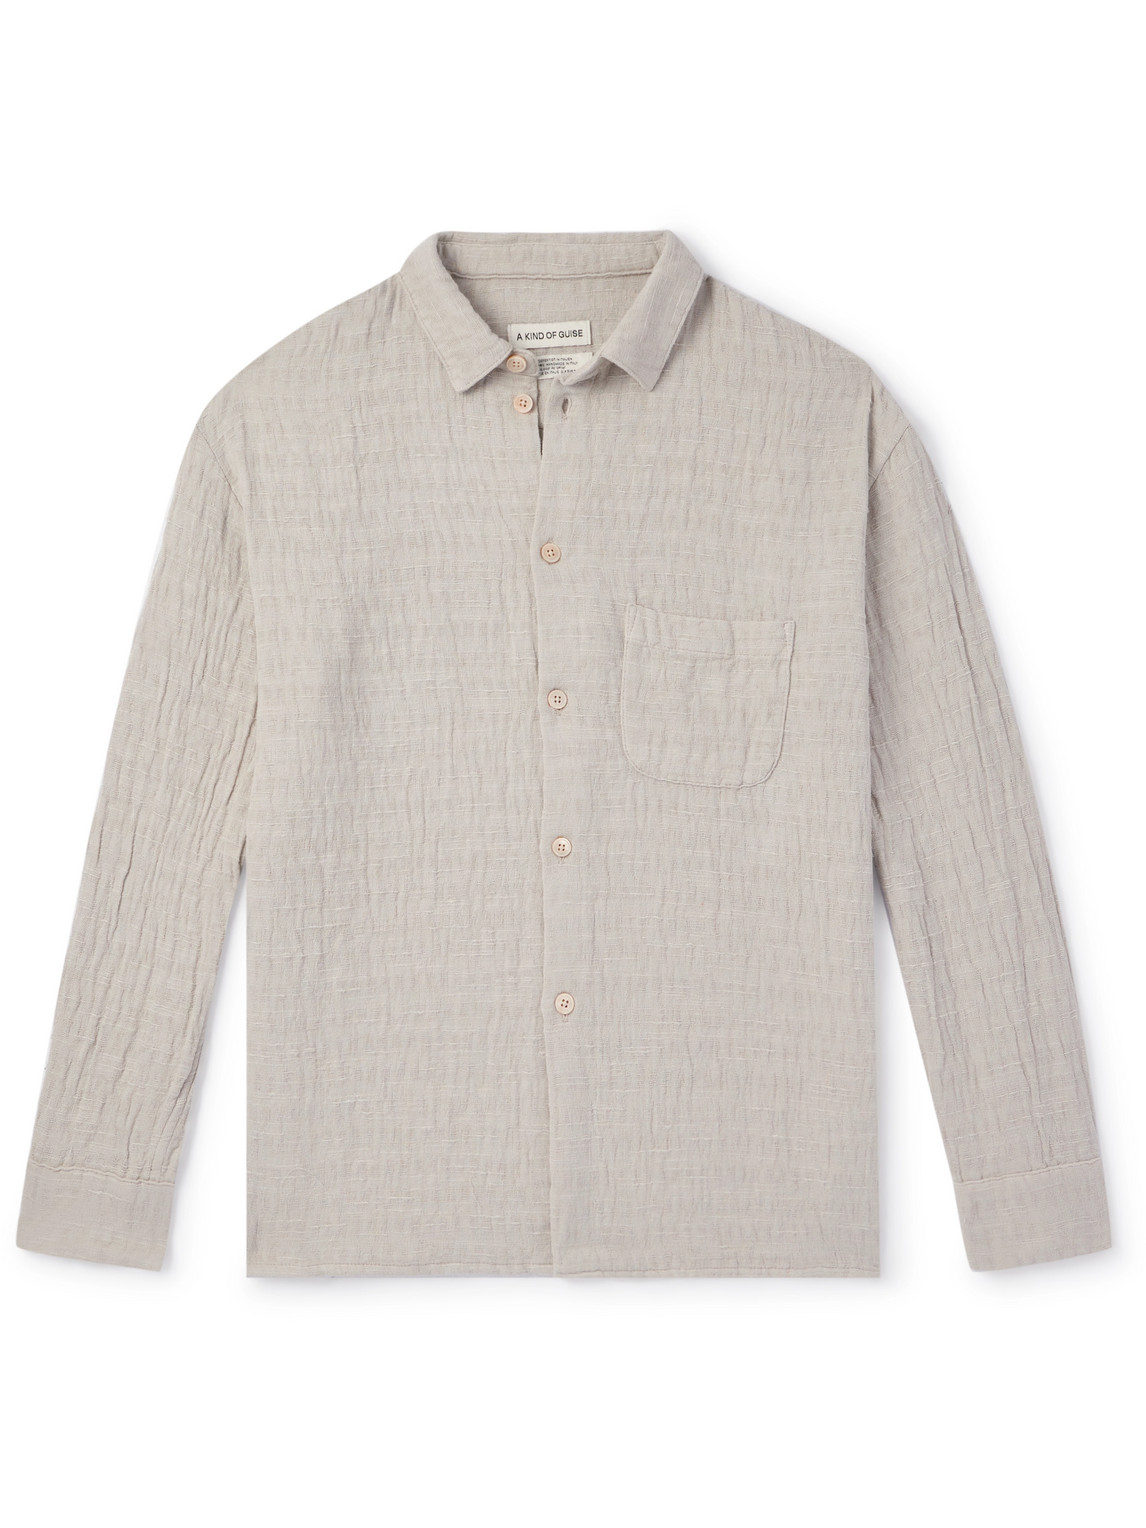 Gusto Cotton and Hemp-Blend Shirt